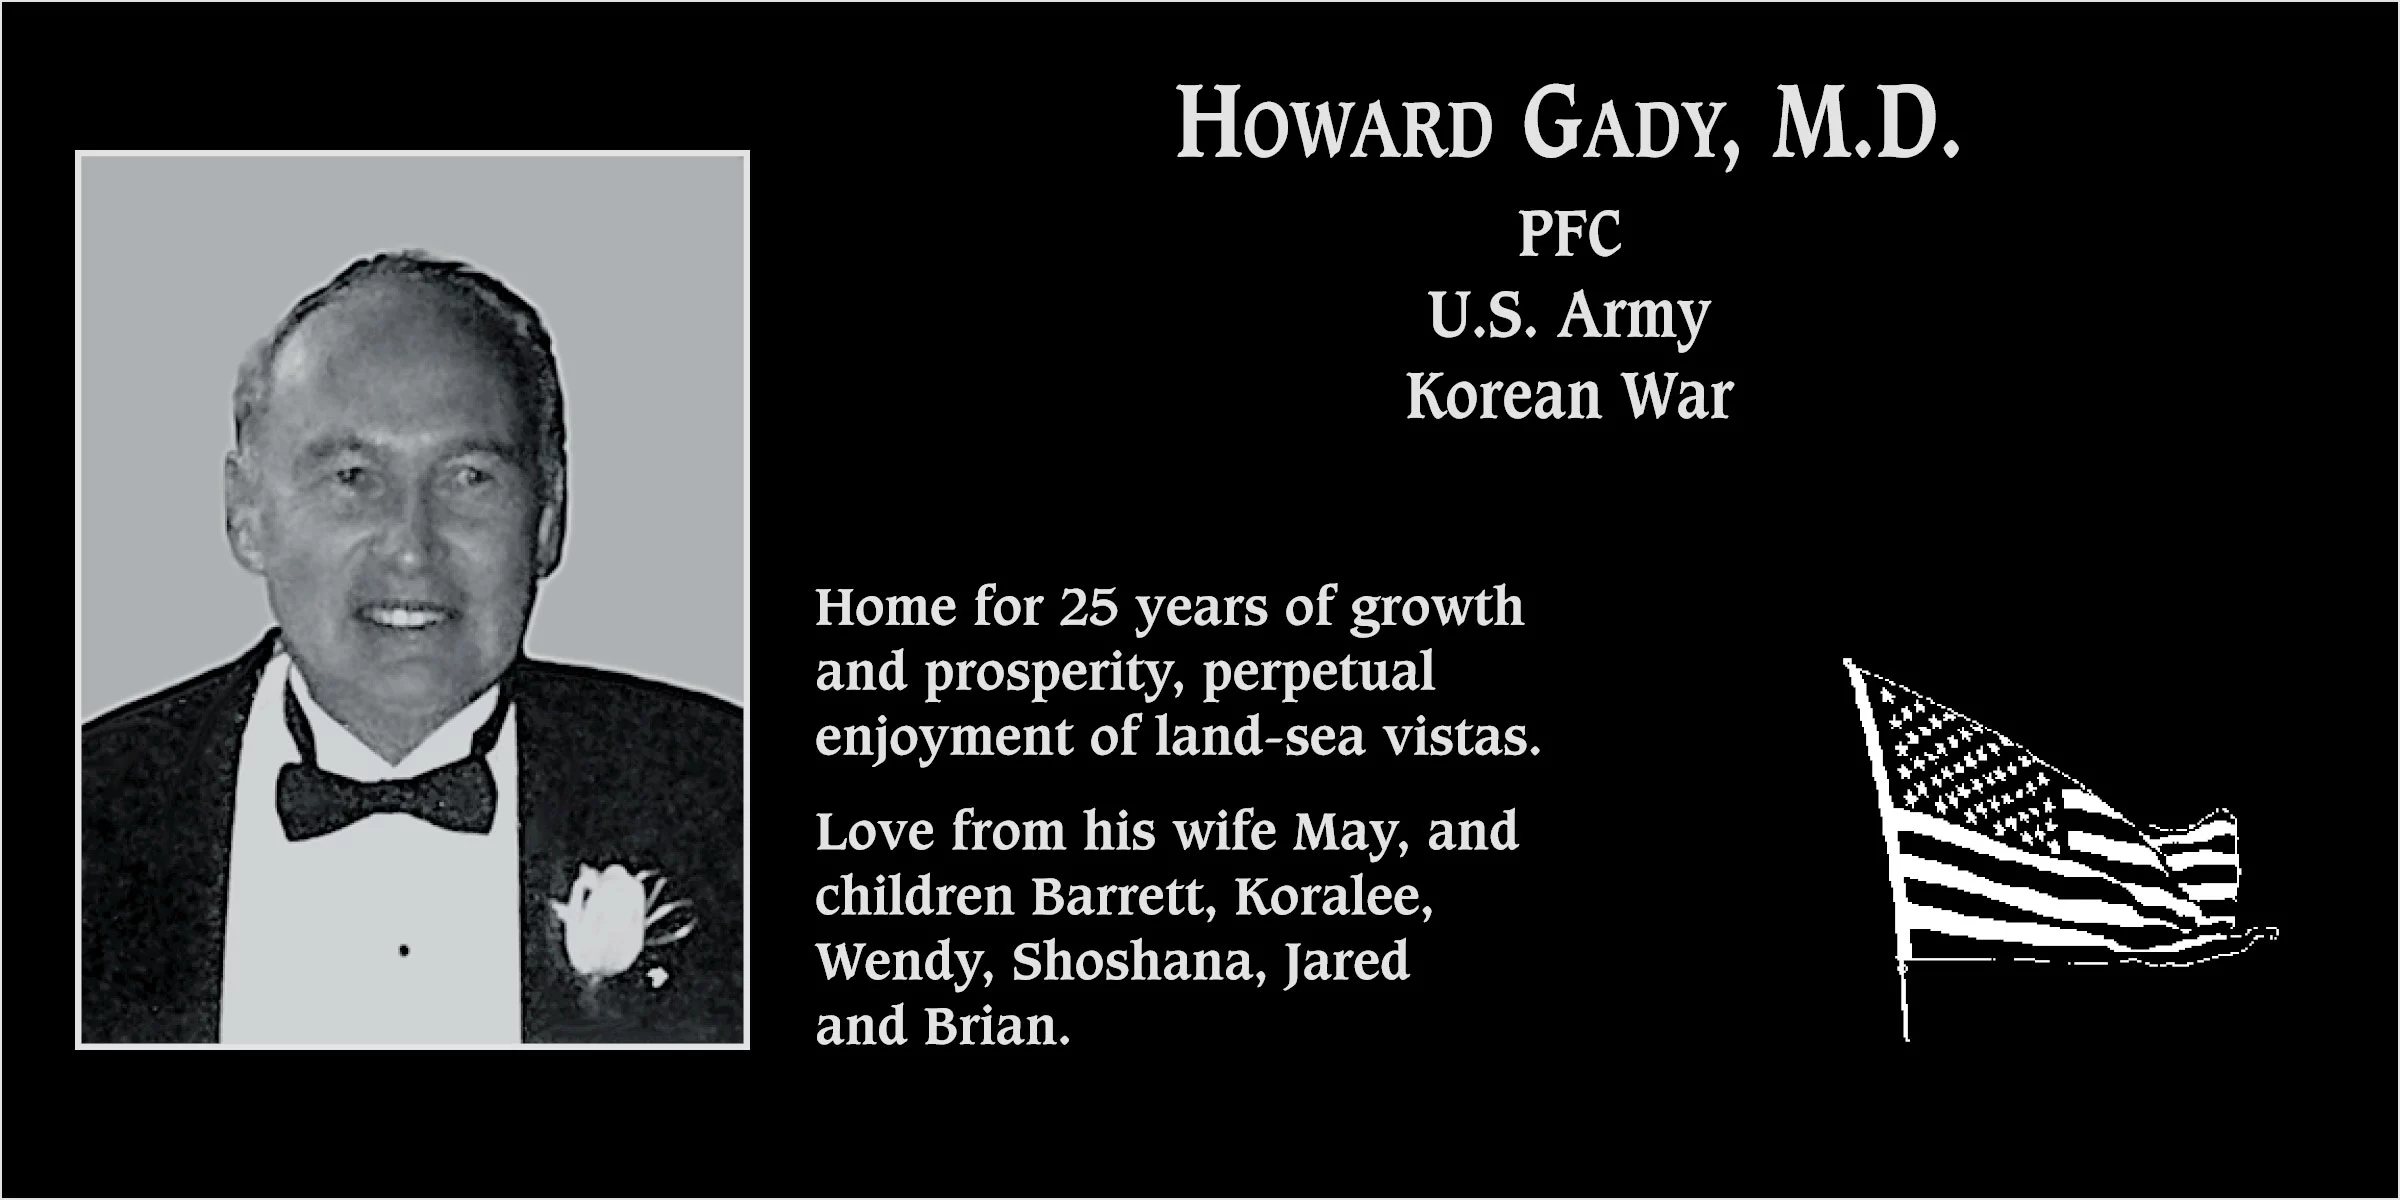 Howard Gady